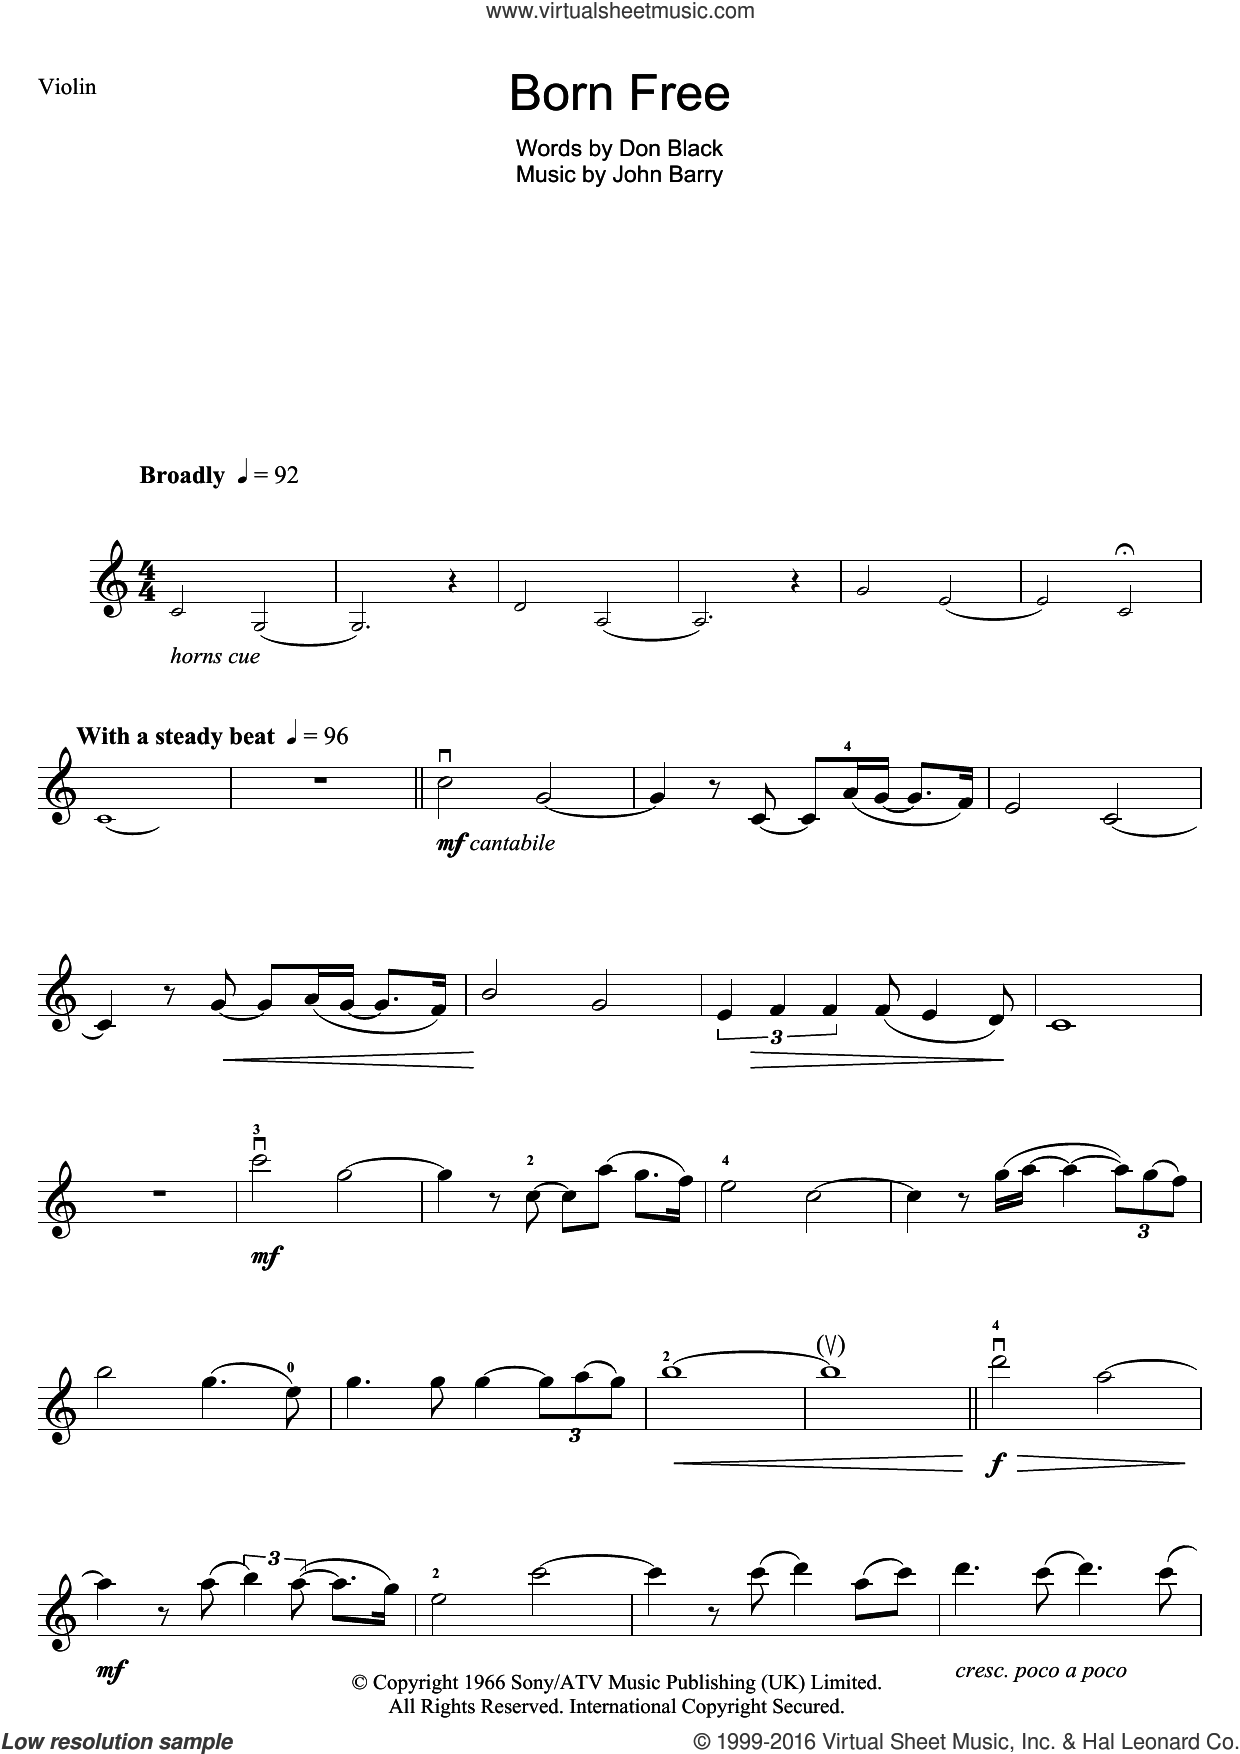 Monro - Born Free sheet music for violin solo [PDF]